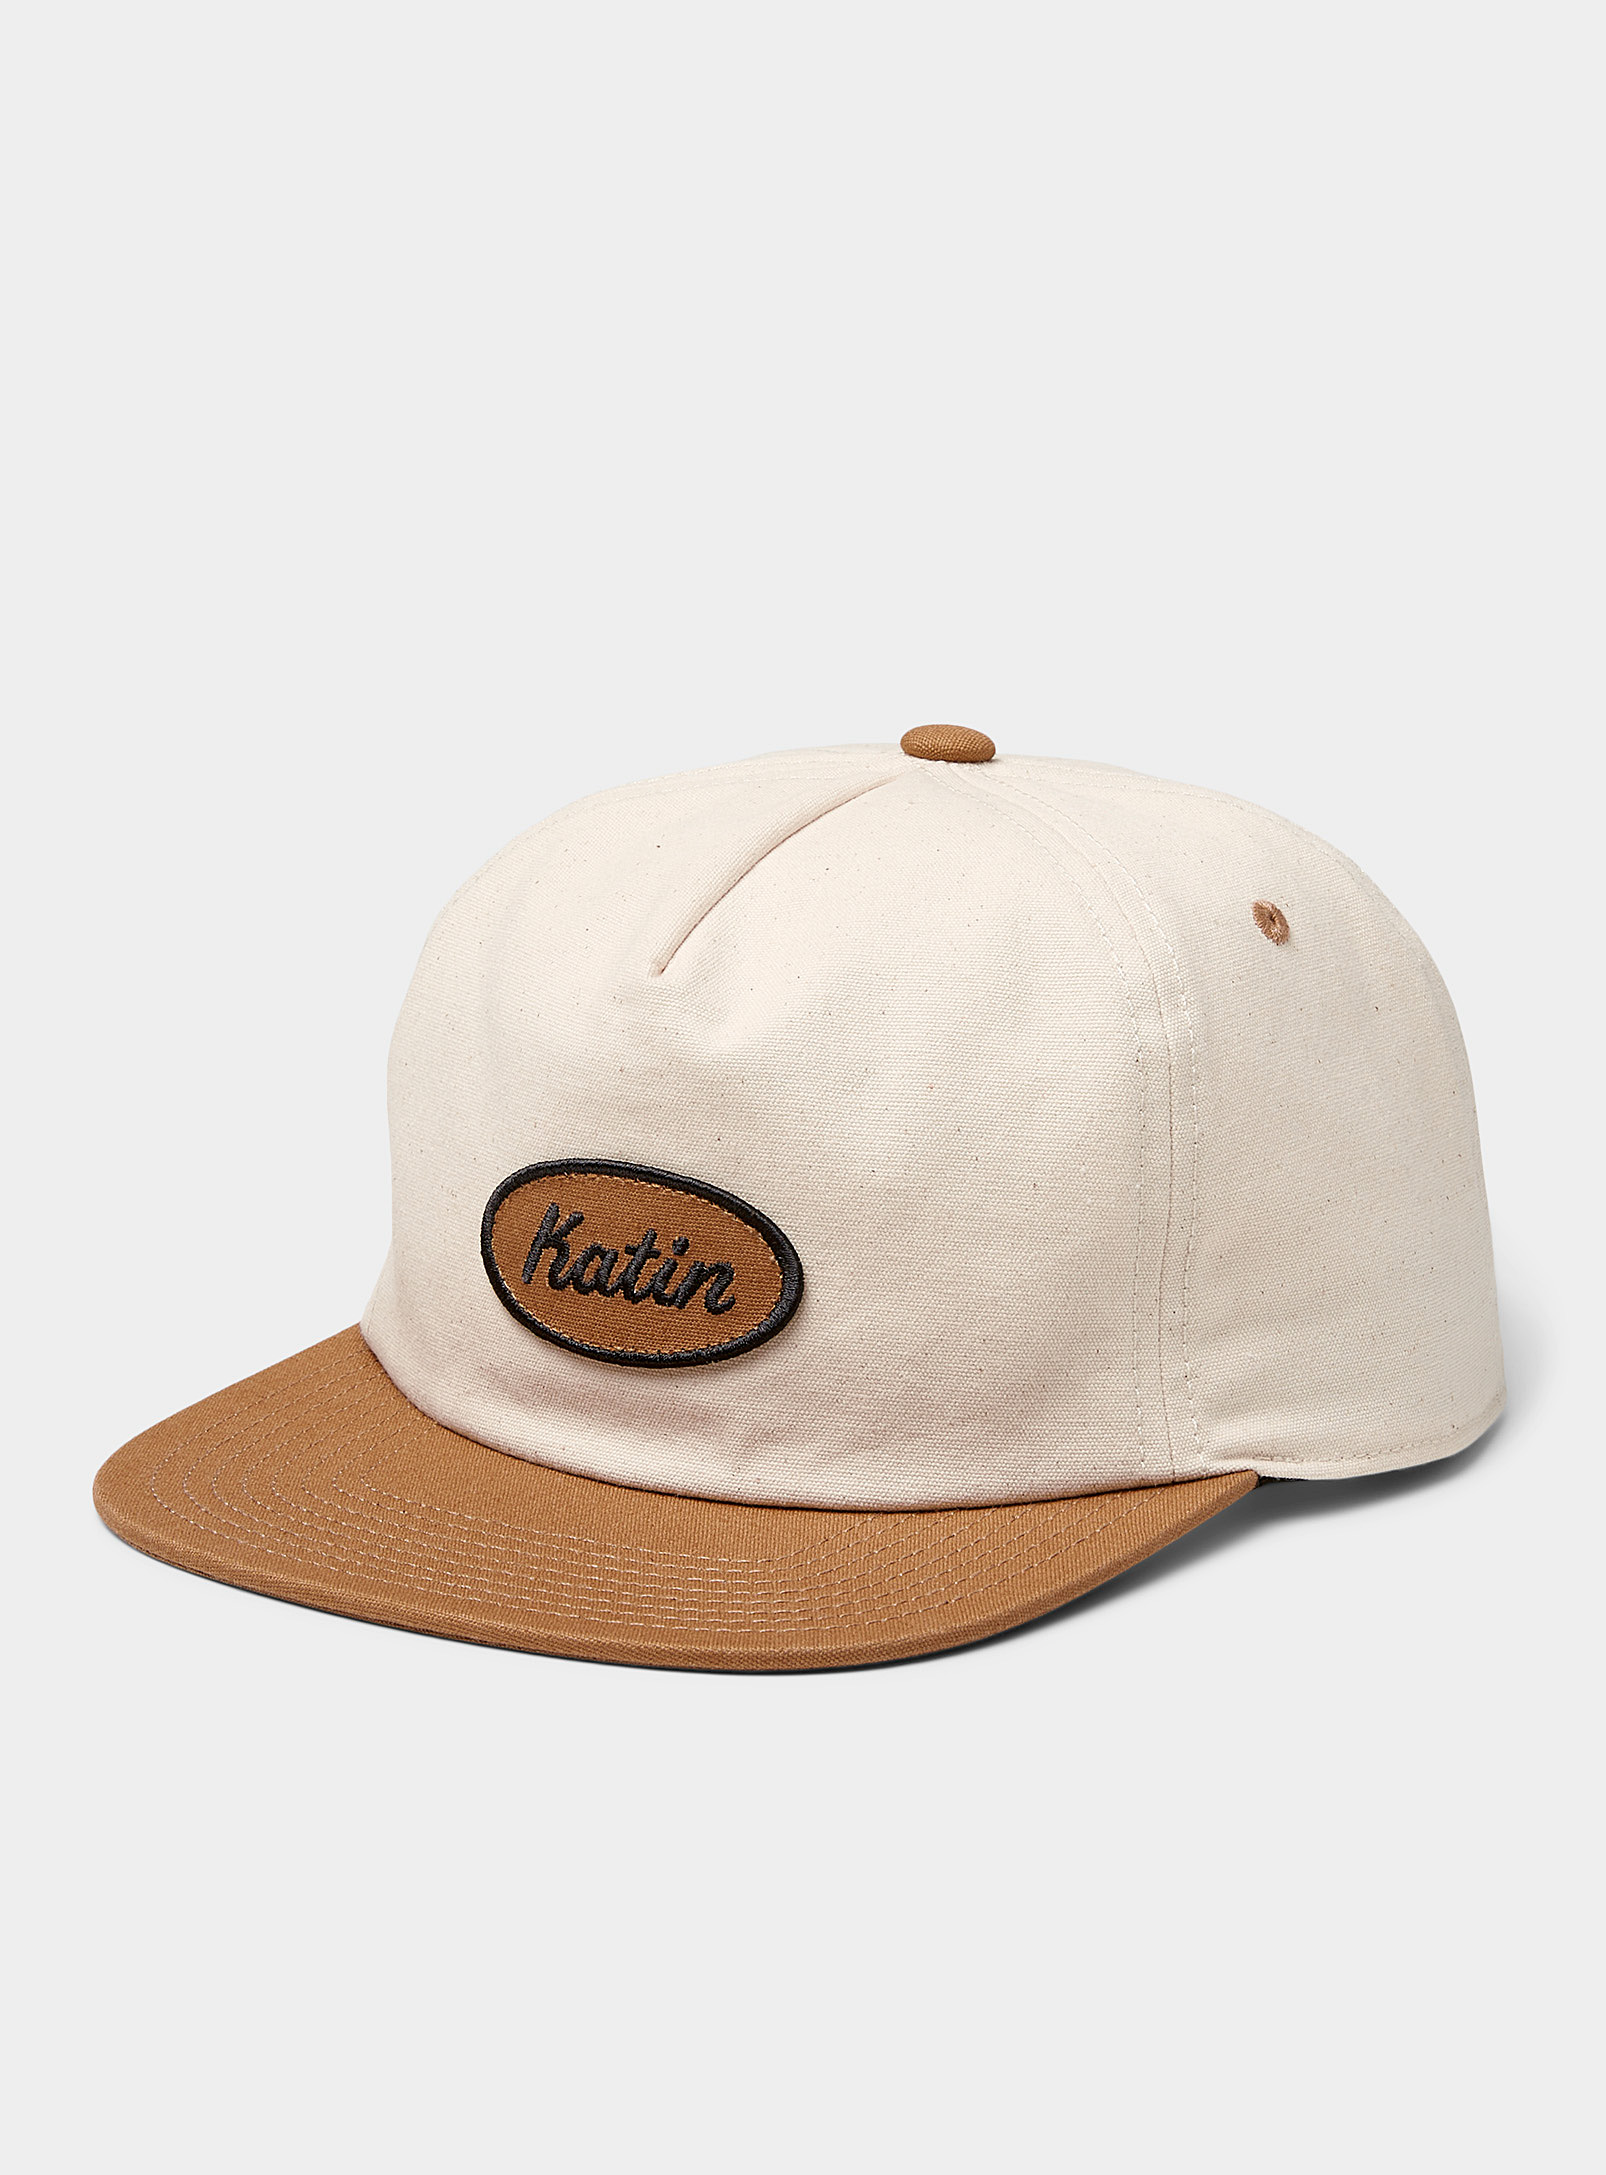 Katin Roadside Snapback Baseball Hat In Cream, Men's At Urban Outfitters